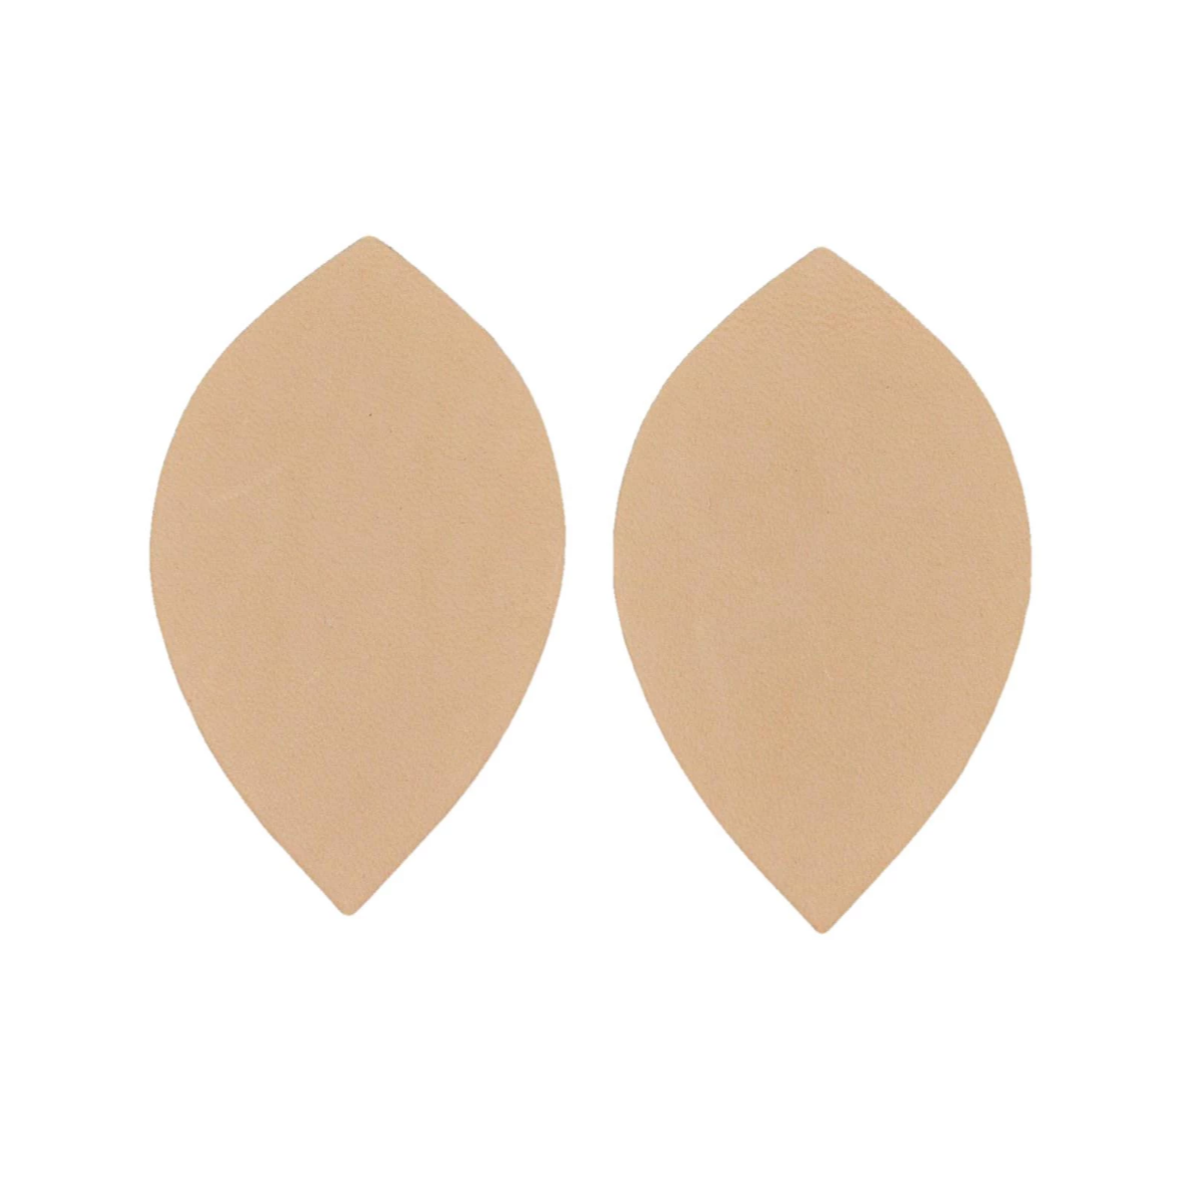 Artisan's Choice Veg Tan Die Cut Leaf Earrings, Medium Leaf / 3-4 oz / Small Pack - 3 Pairs / 6 Pieces | The Leather Guy